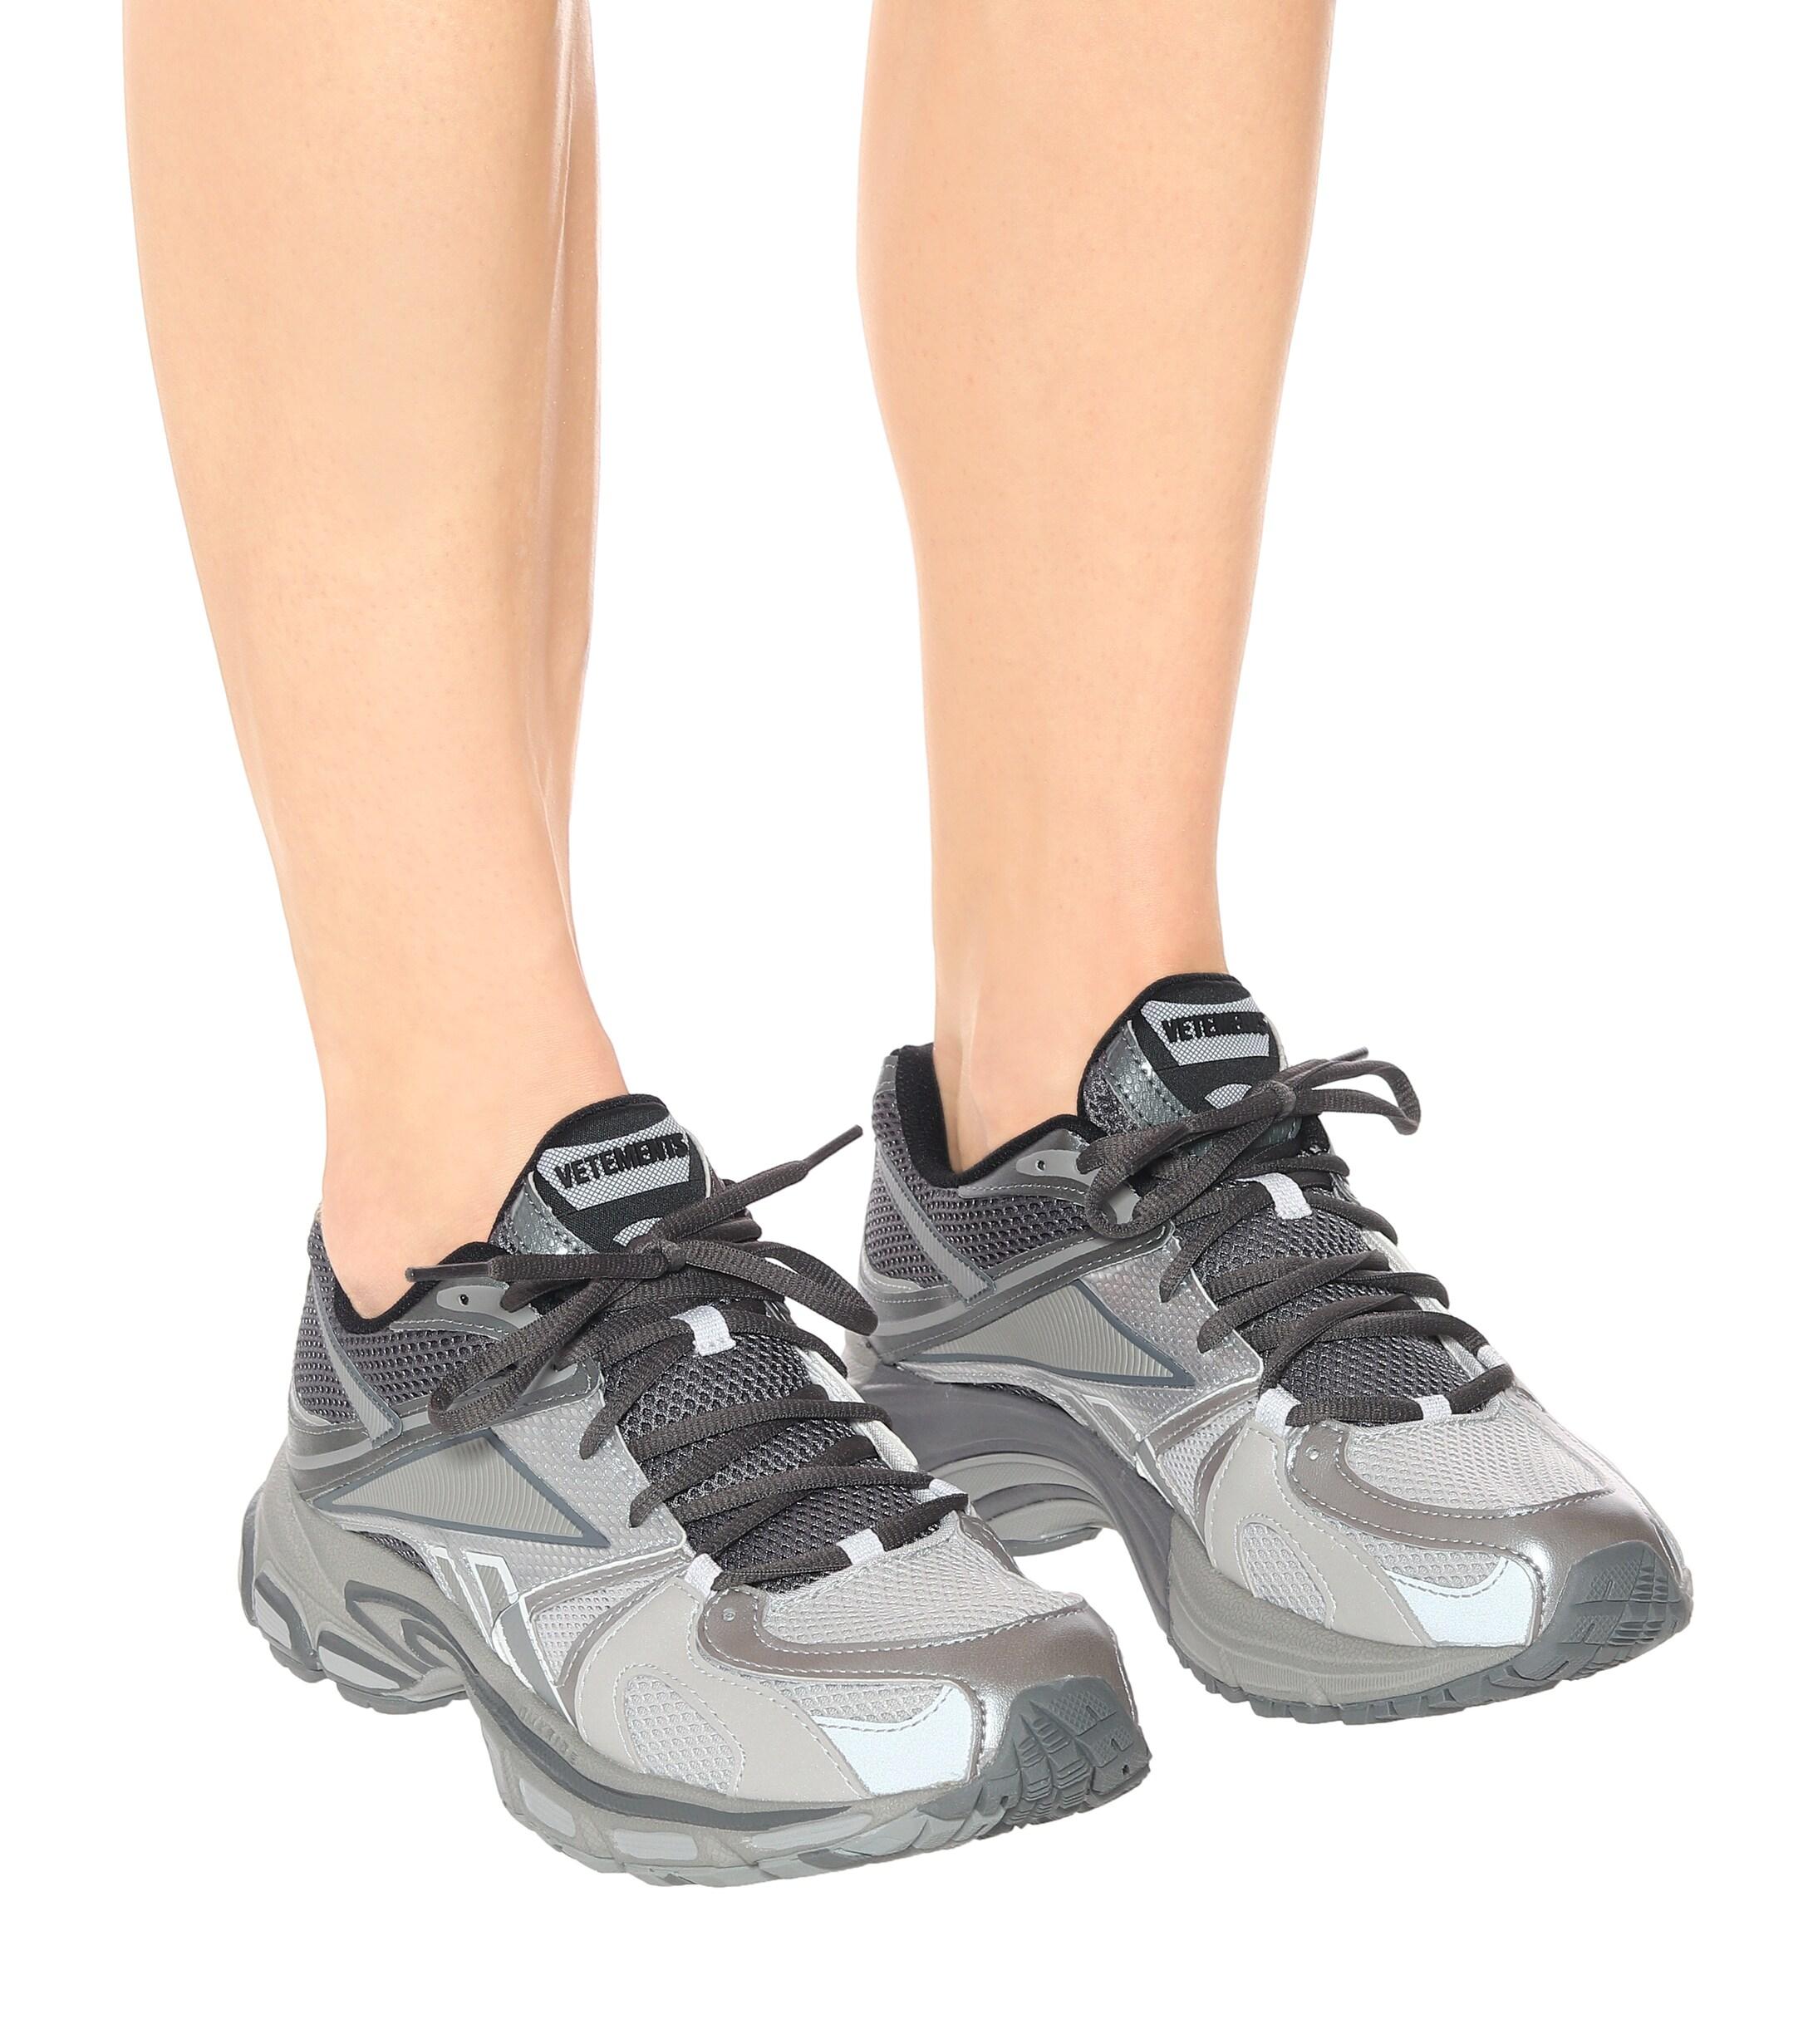 Vetements X Reebok Runner 200 Sneakers in | Lyst